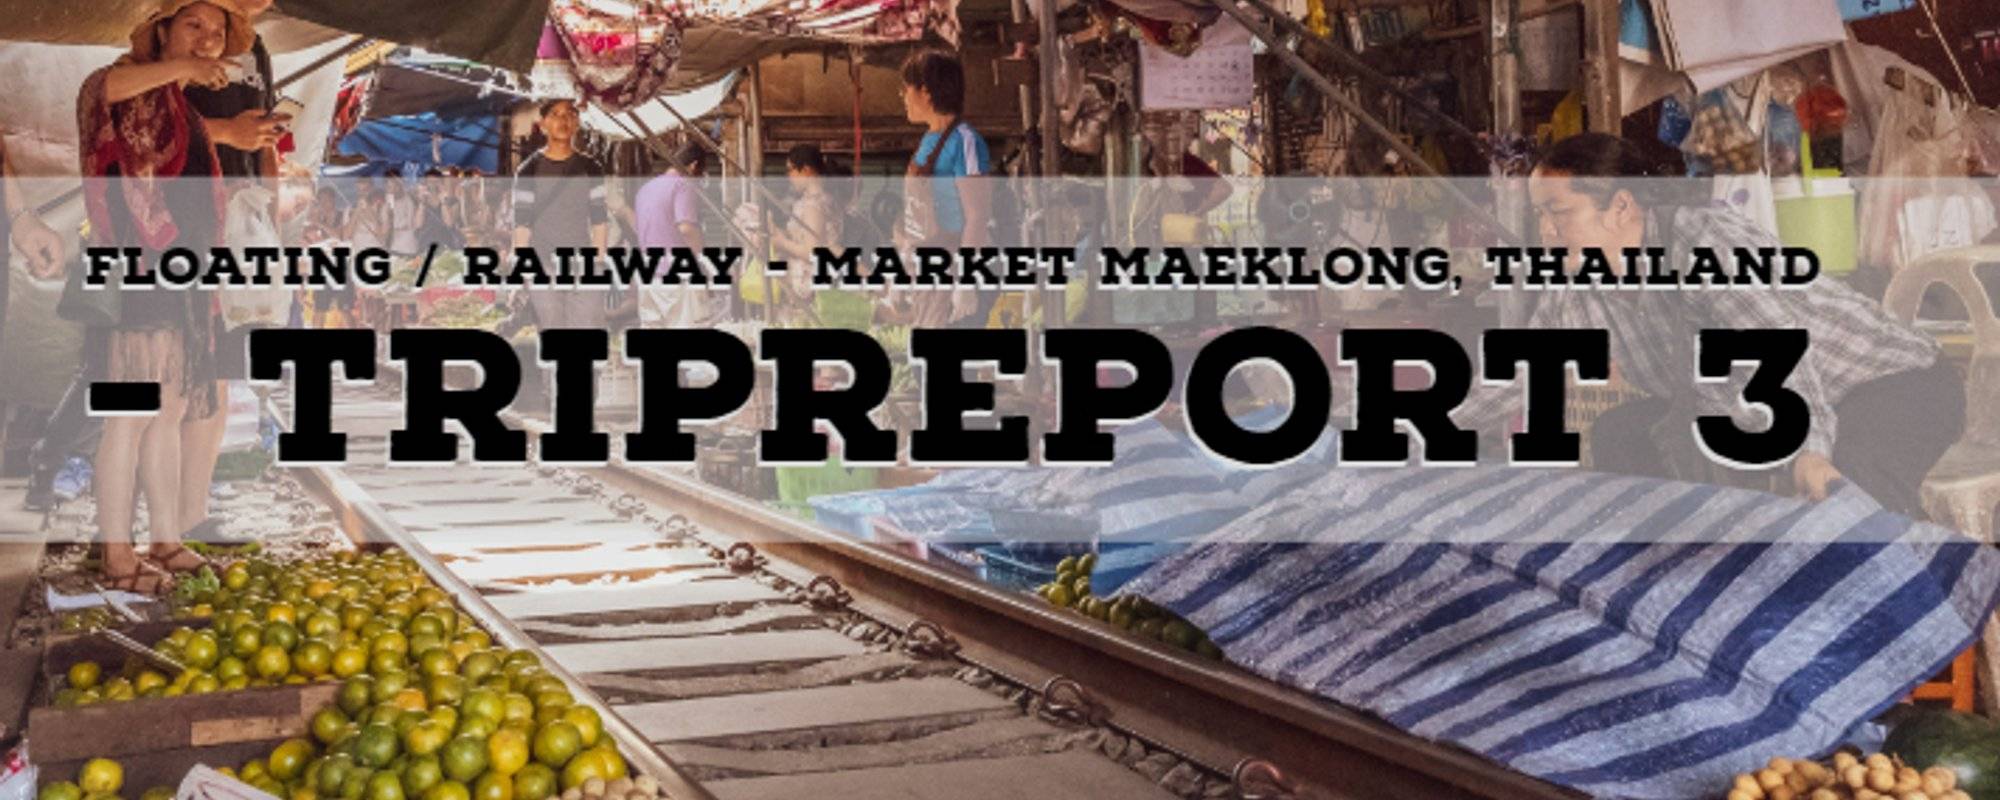 Tripreport 3 - Floating / Railway Market Maeklong, Thailand